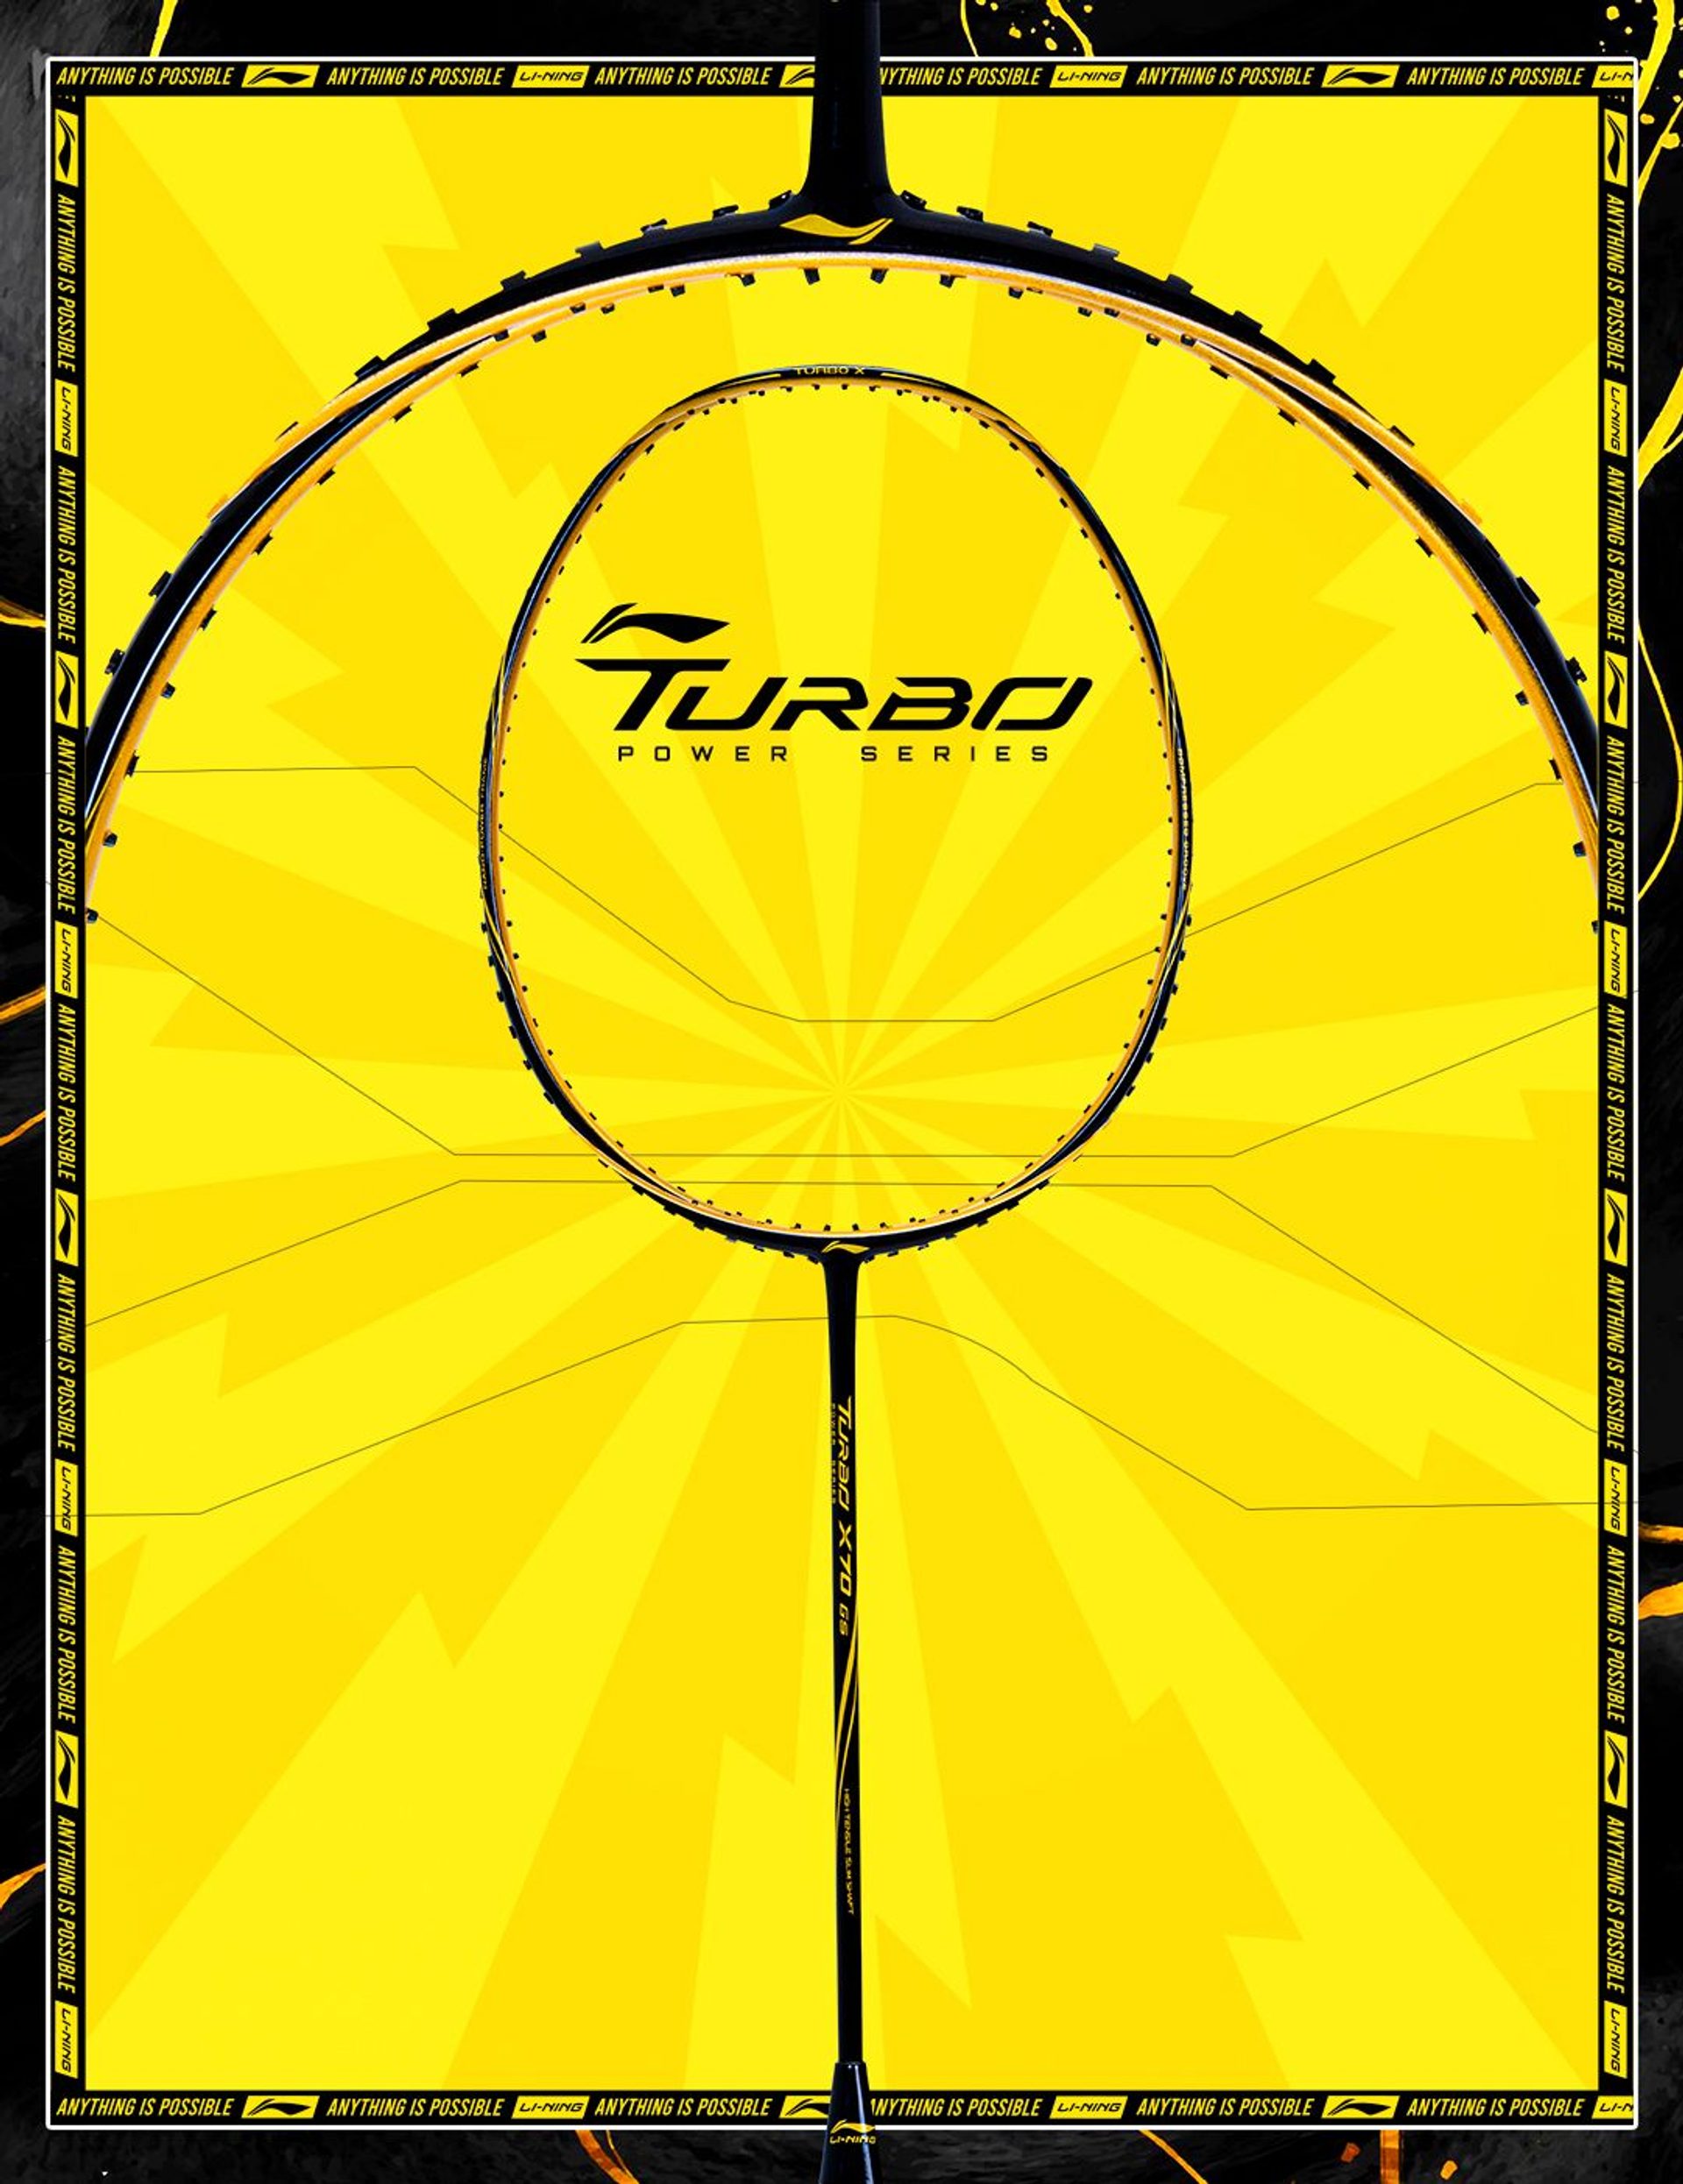 Turbo X G5 badminton racket